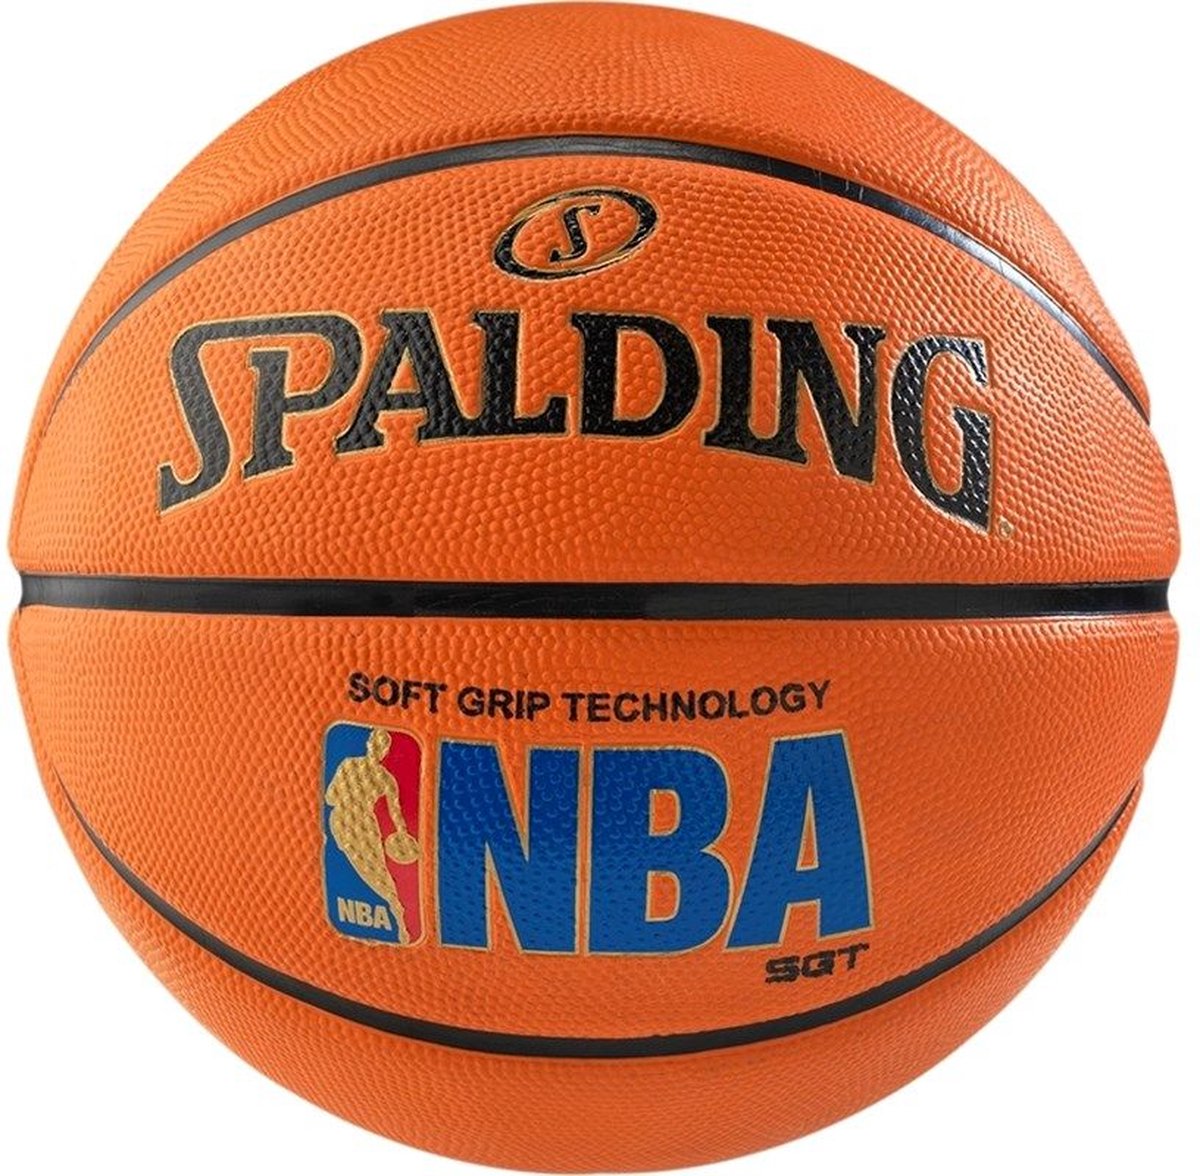 Spalding NBA Logoman Soft Grip Basketbal